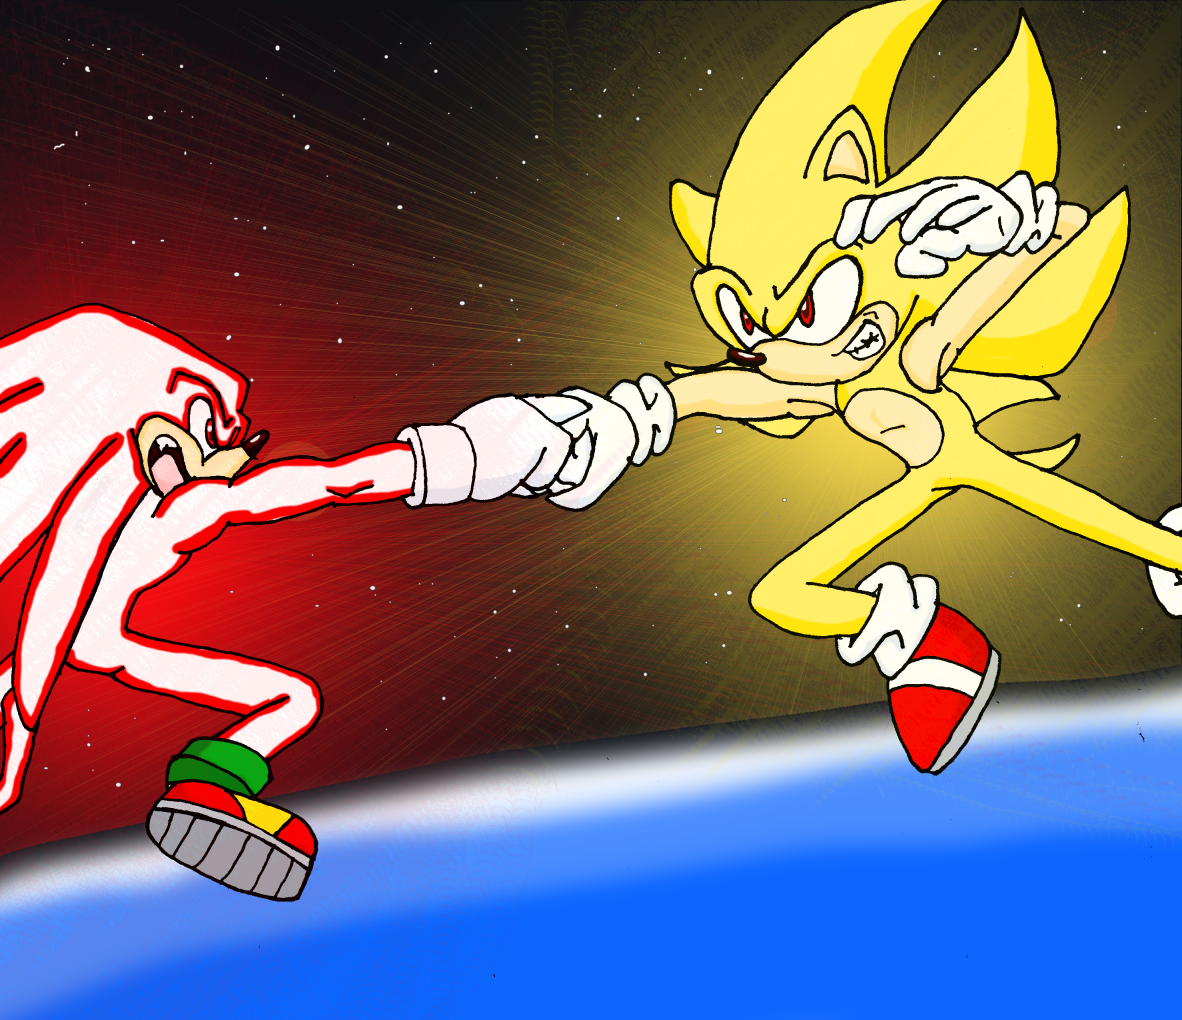 Hyper Sonic vs. Apex Seelkadoom by jalonso980 on DeviantArt